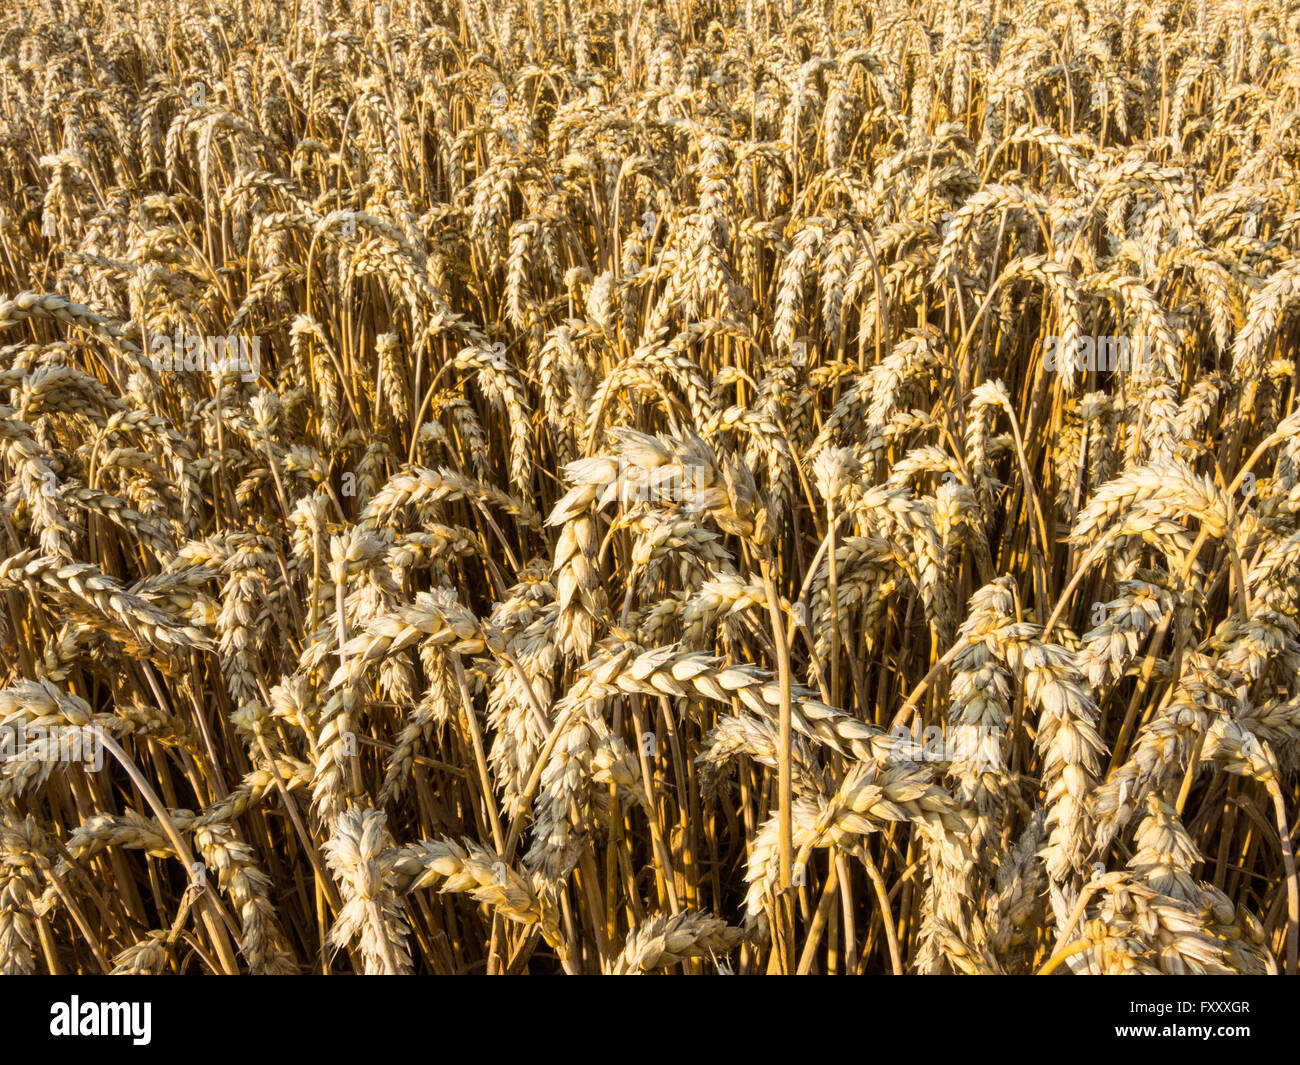 Field with ripe Common wheat, Triticum aestivum Stock Photo